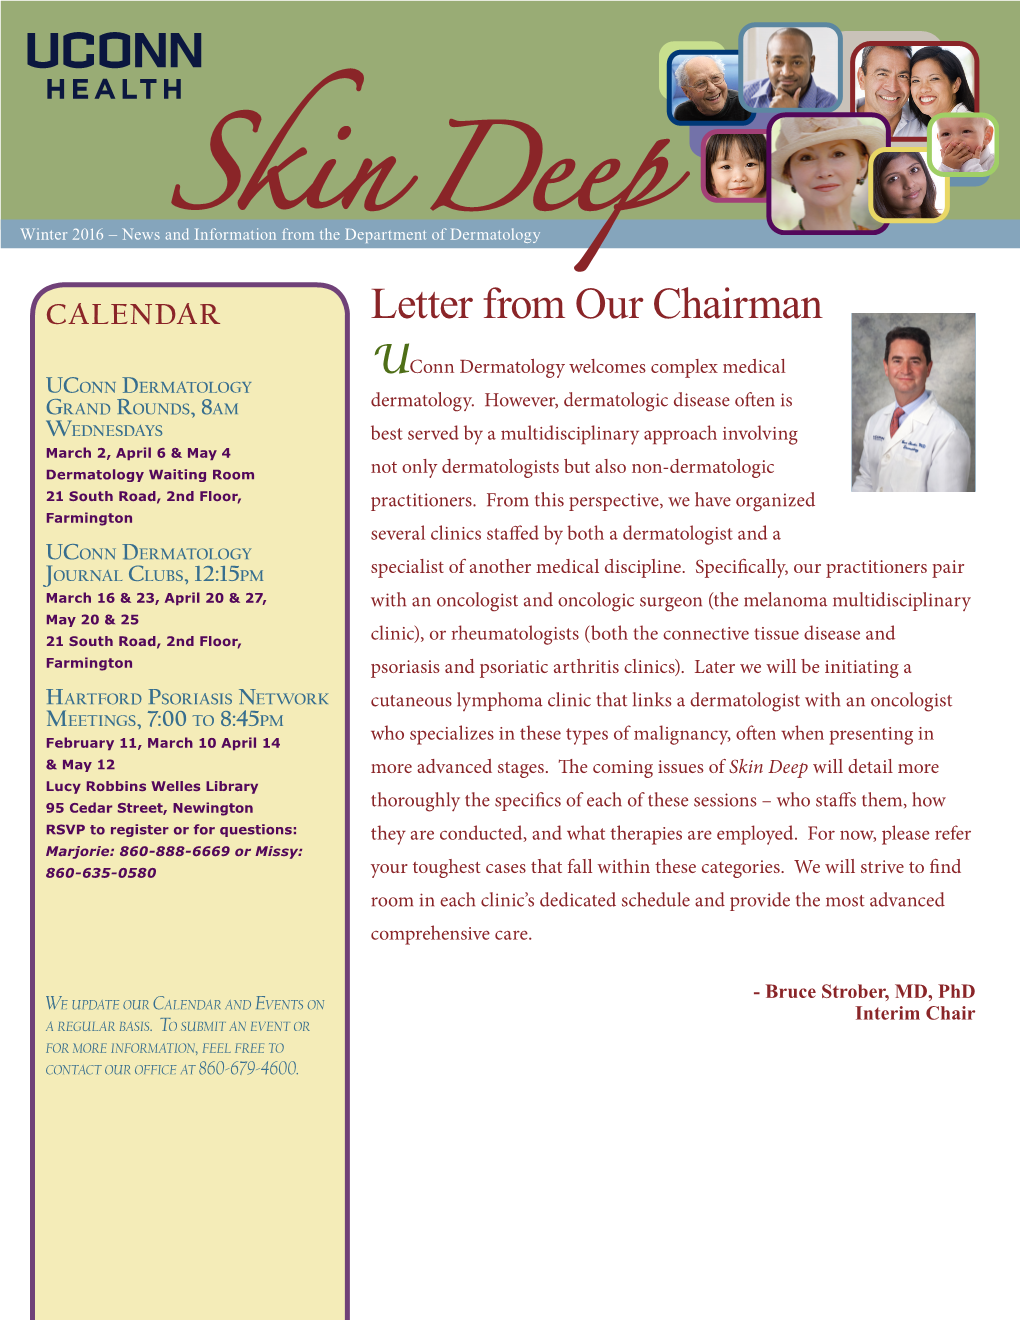 Skin Deep Newsletter, Winter 2016